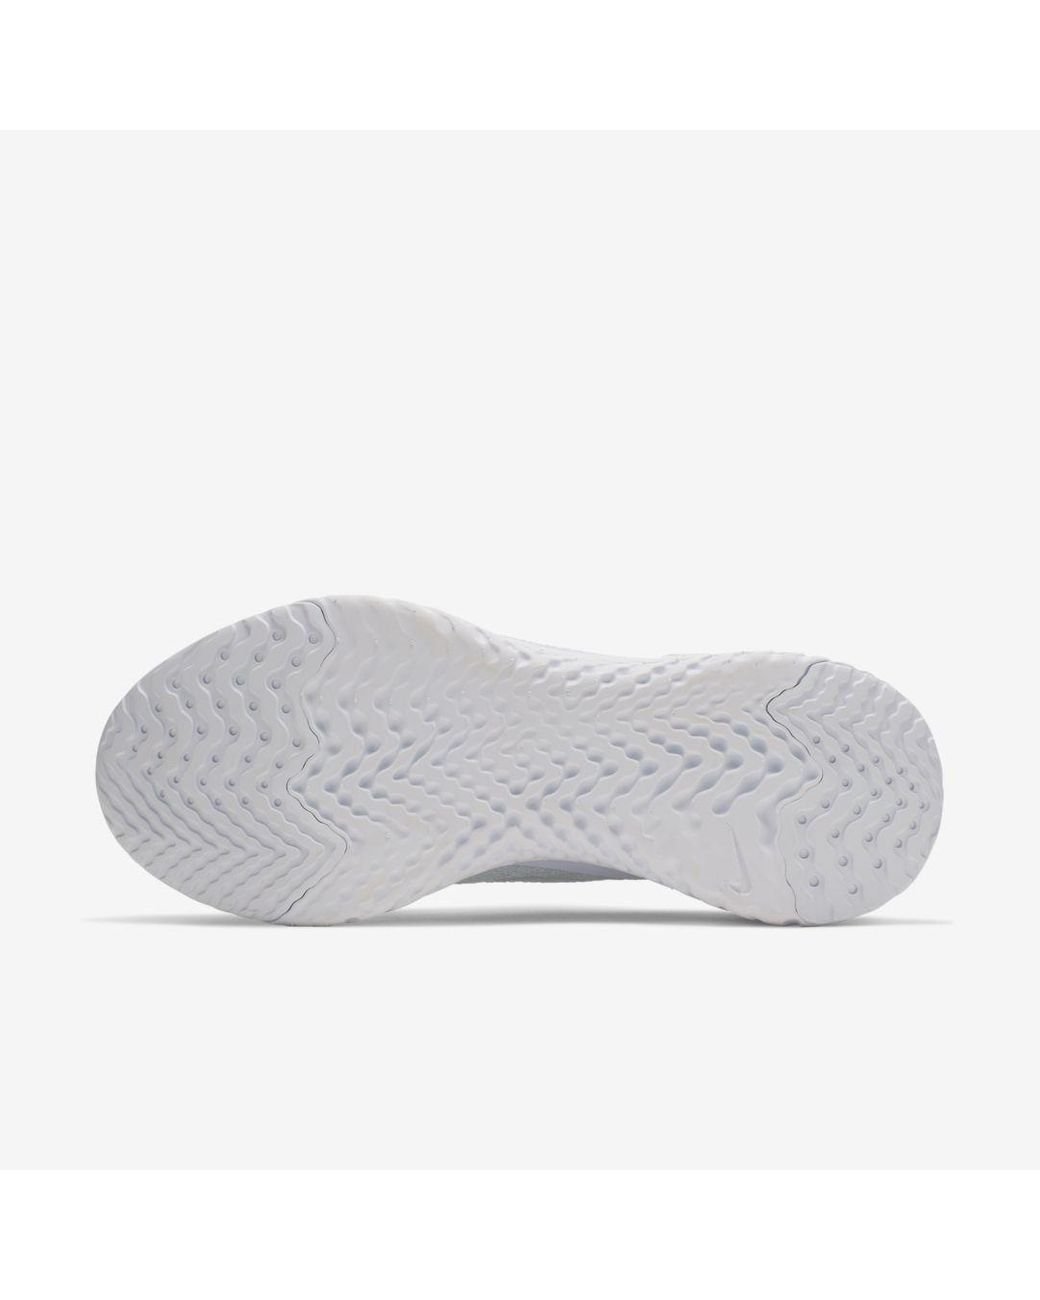 Nike Epic Phantom React Flyknit Running Shoe in White | Lyst